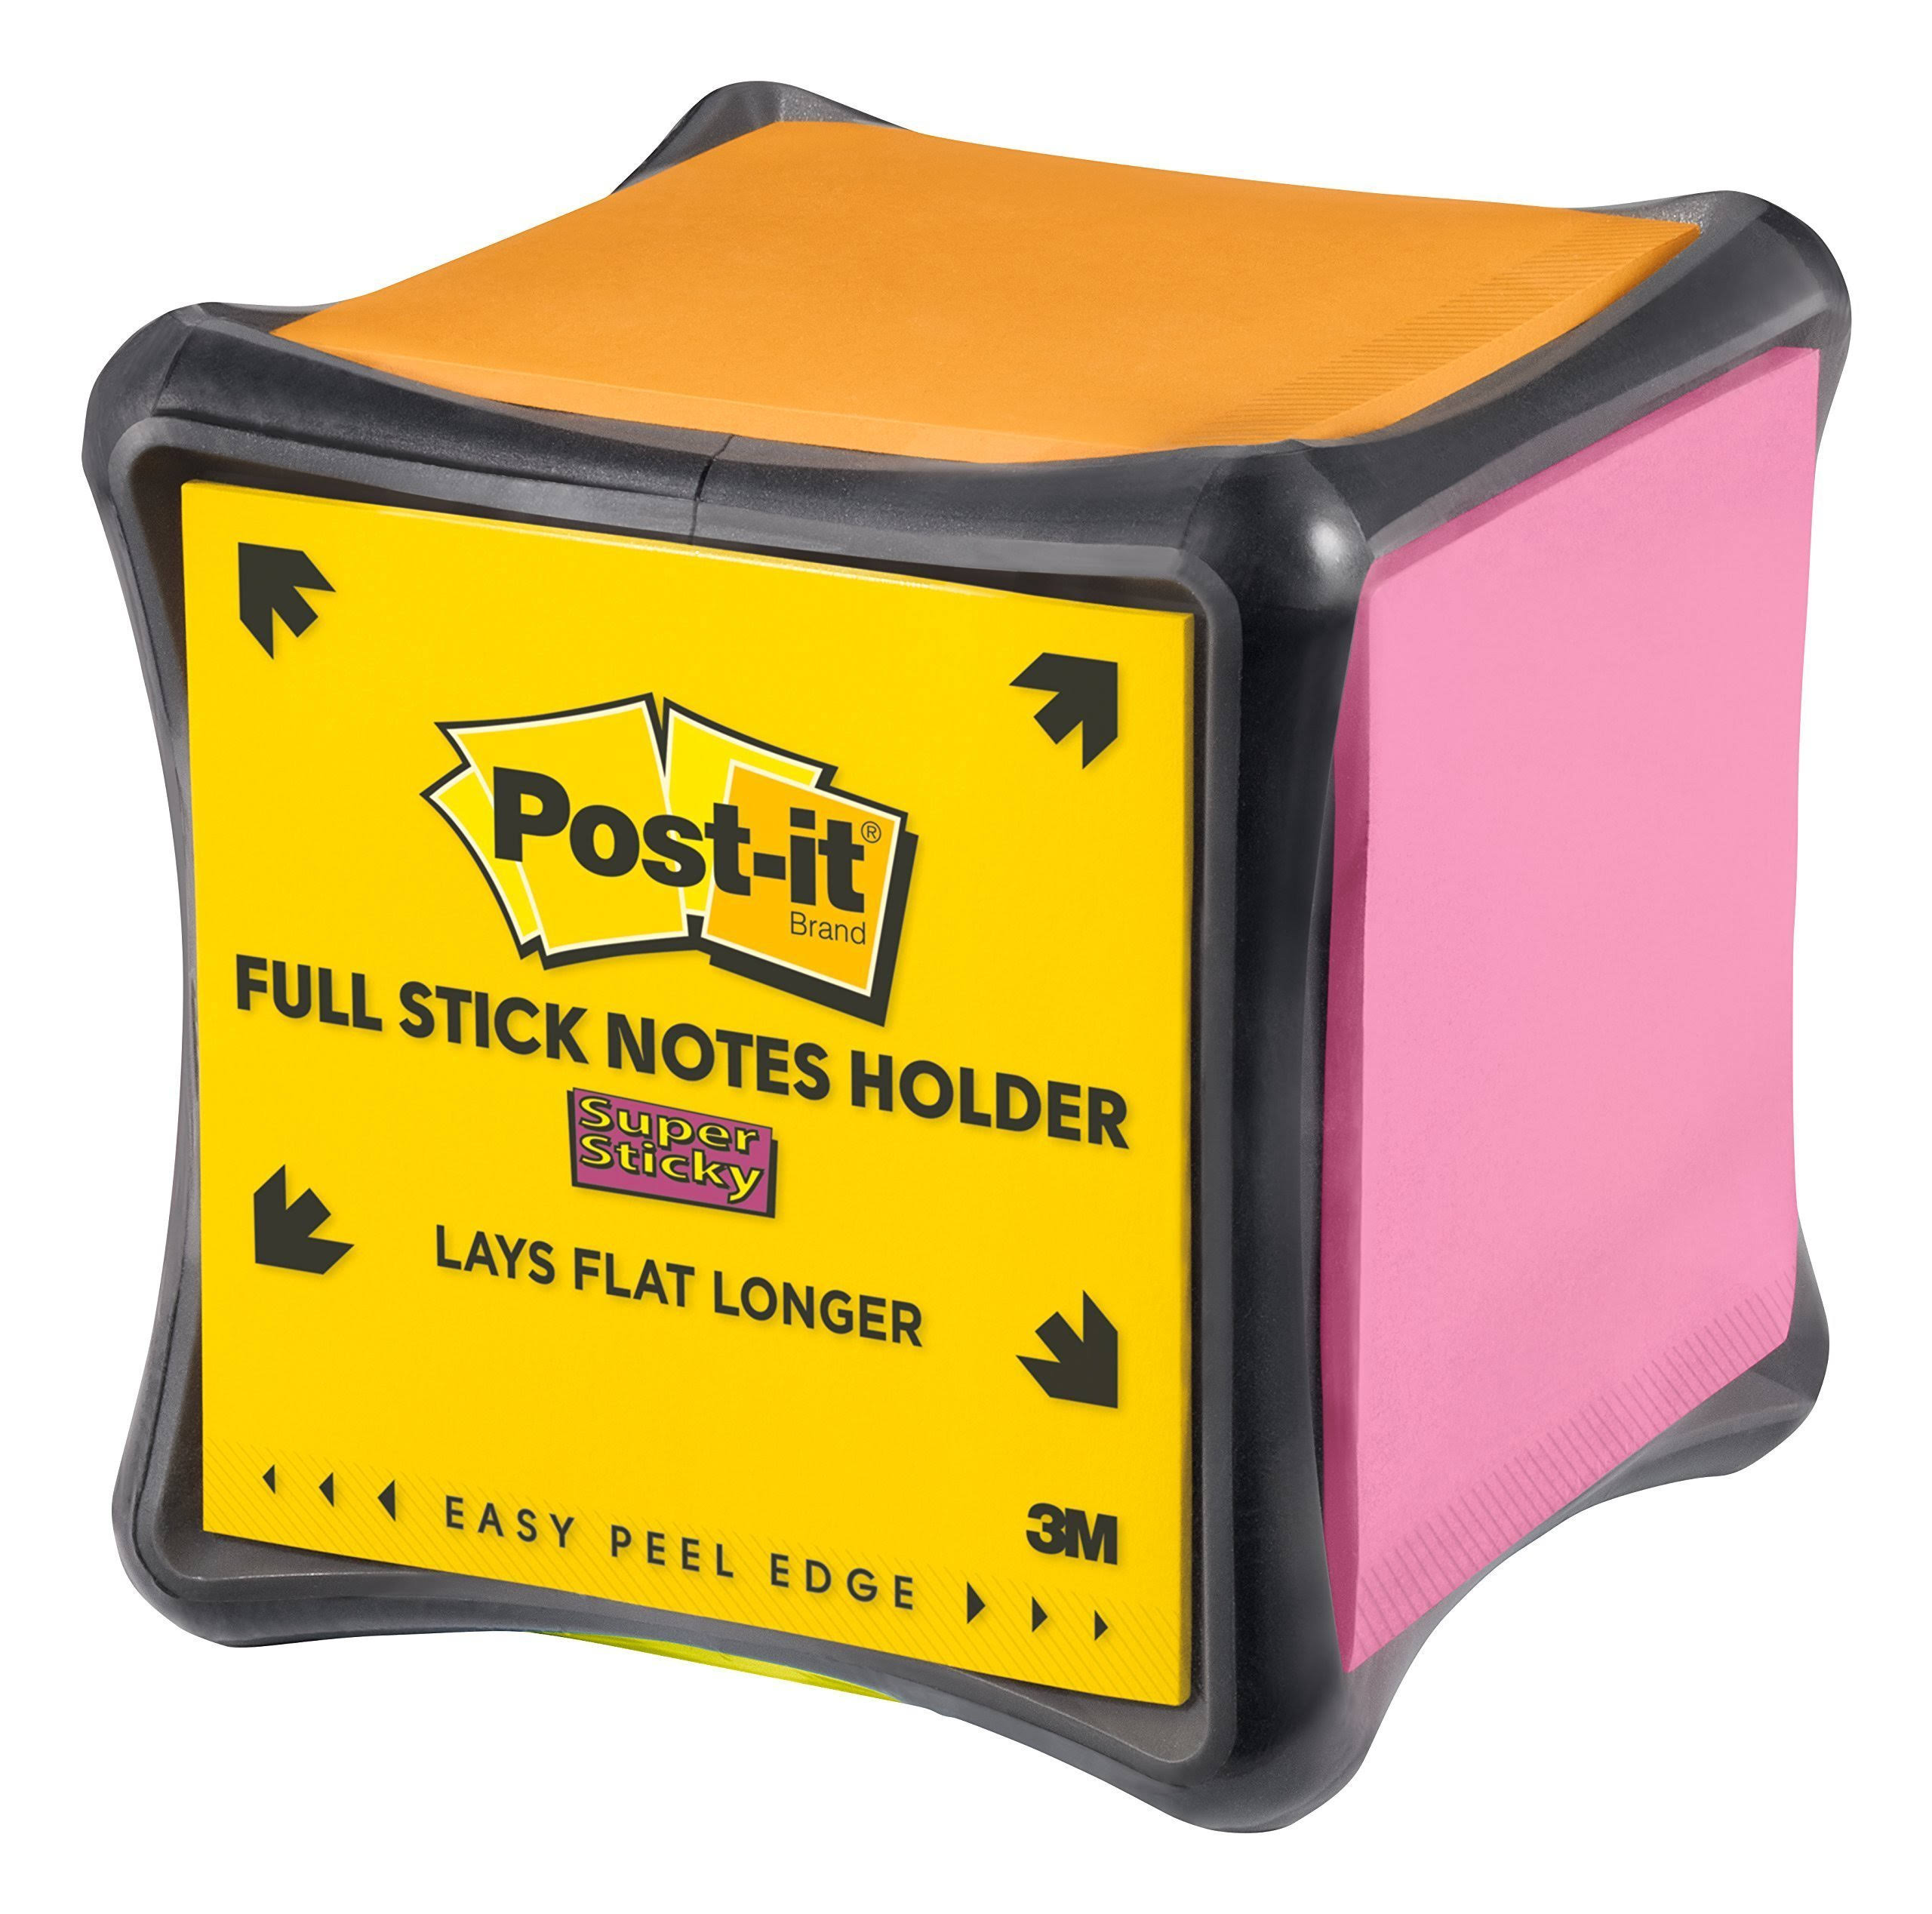 Post-it Full Stick Notes Dispenser - Black